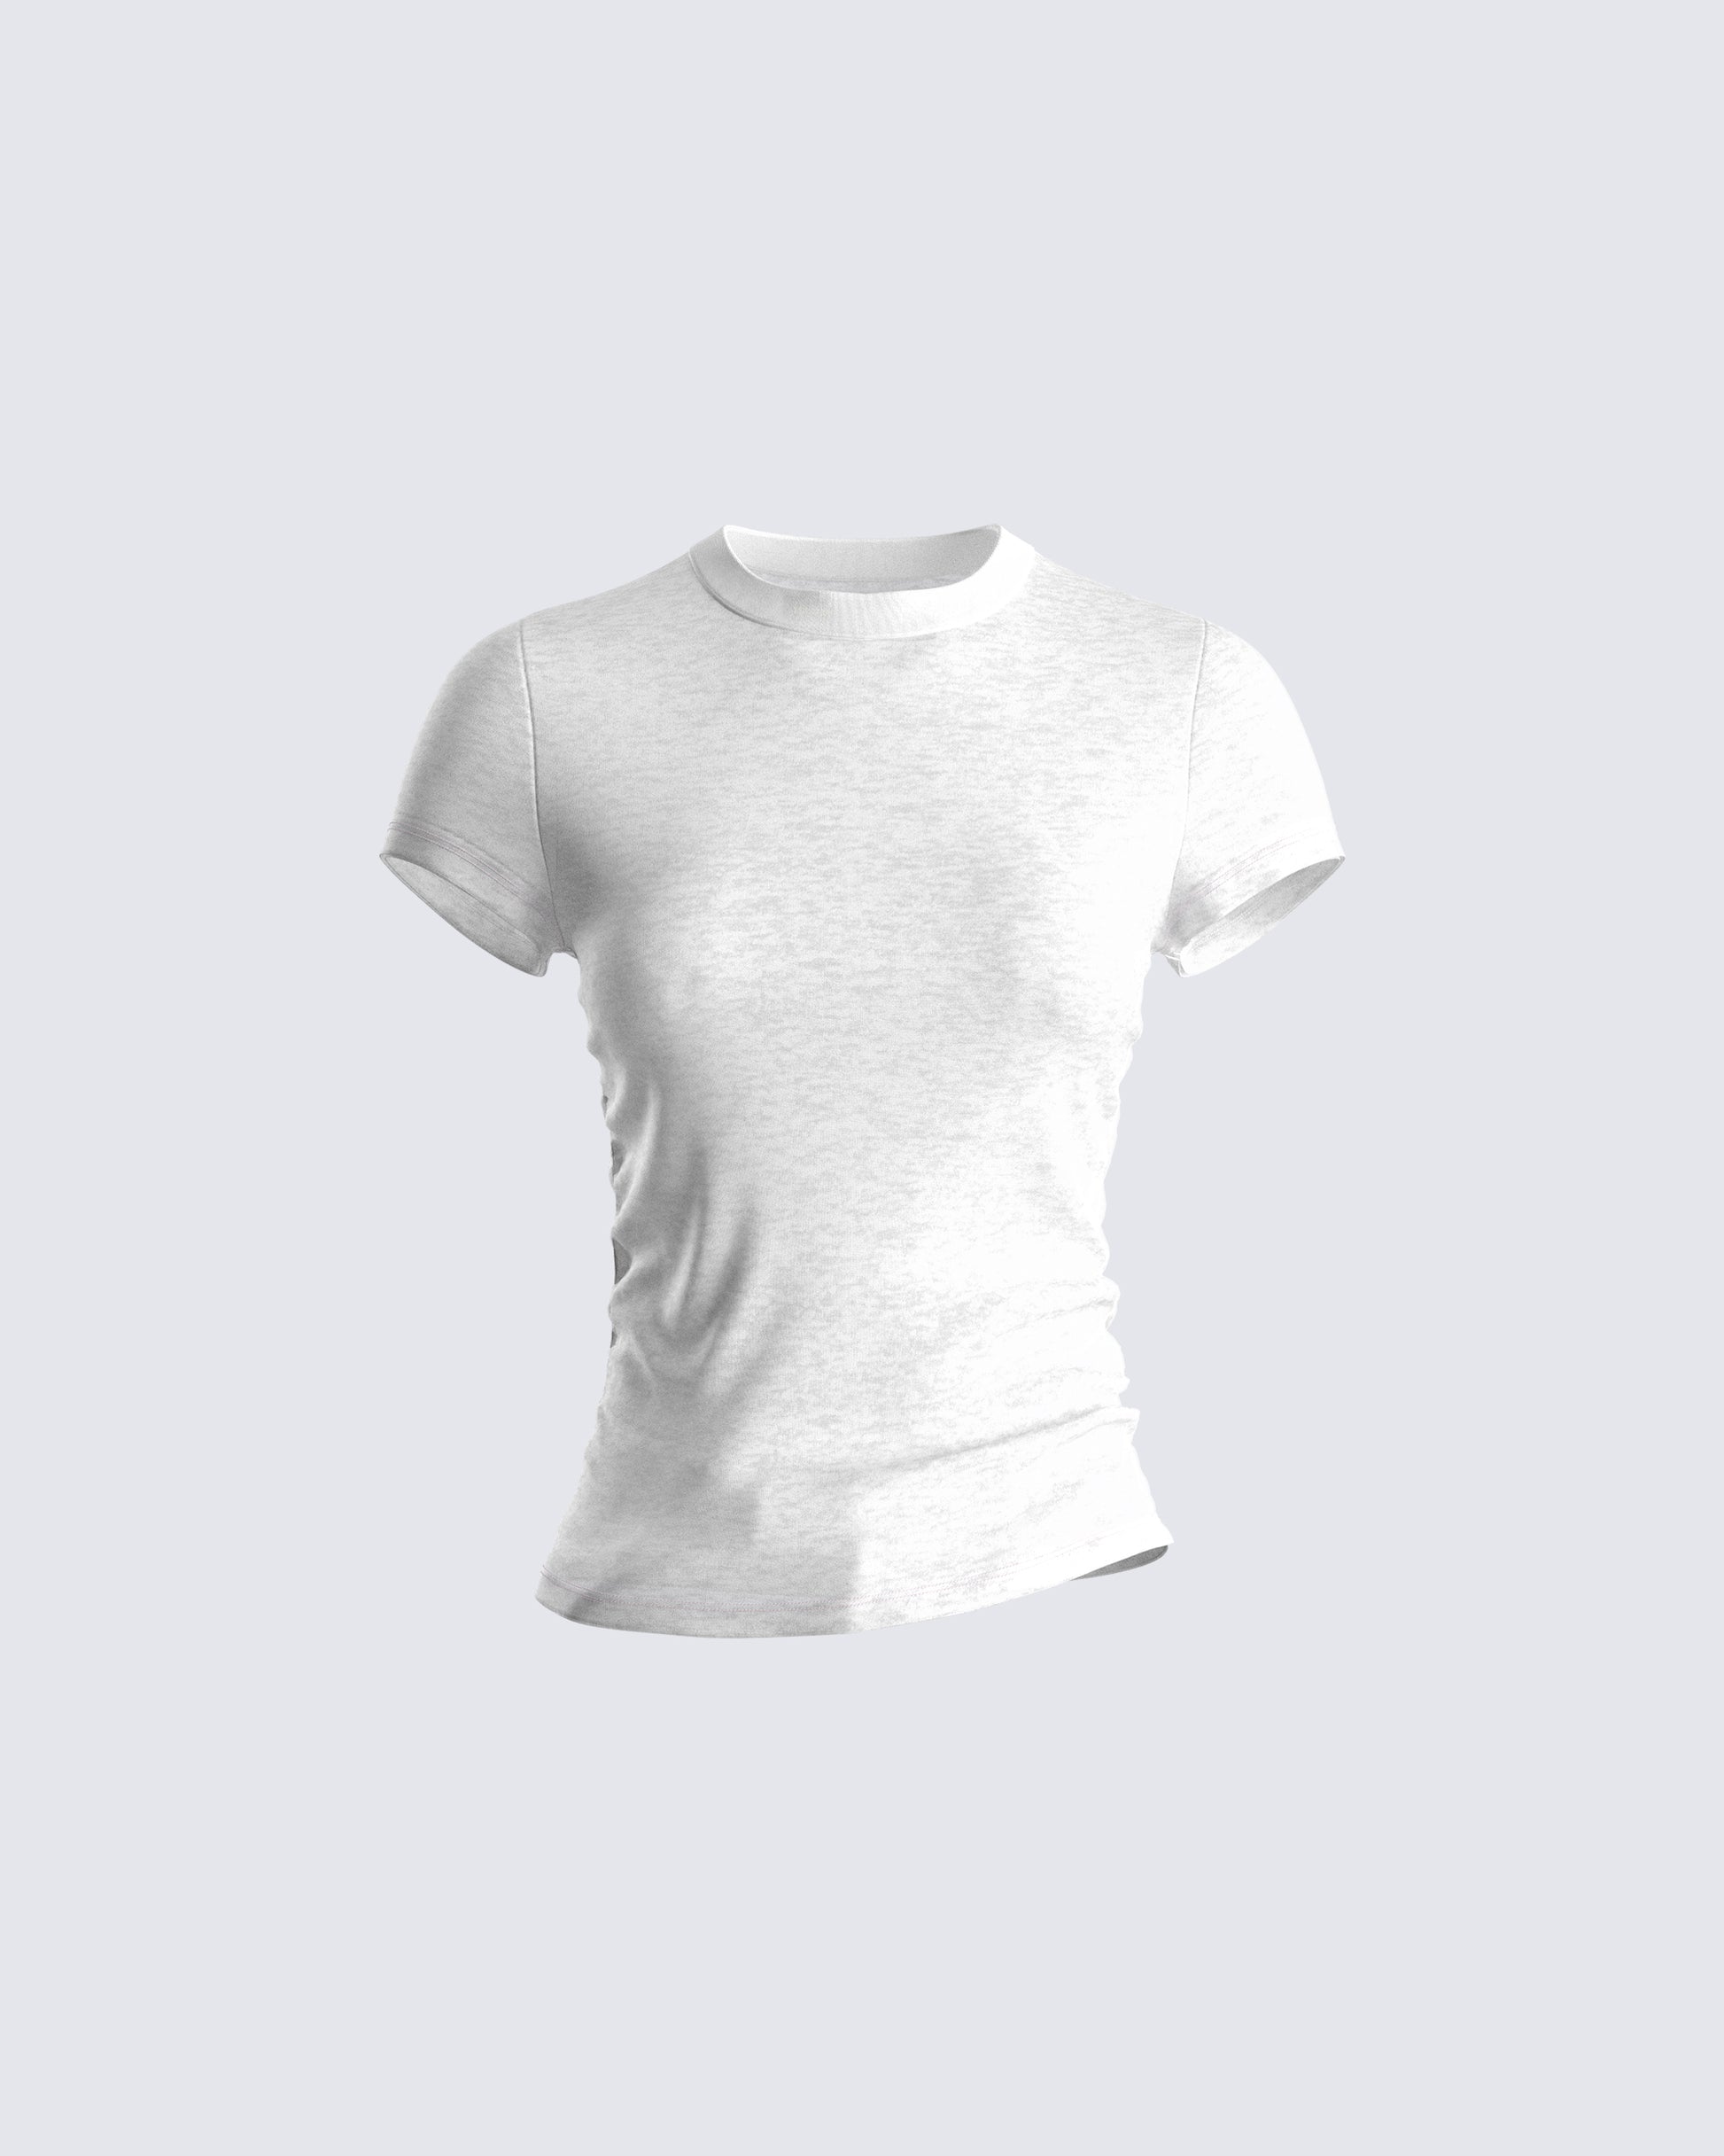 Asher White – Top T FINESSE Shirt Knit Slub